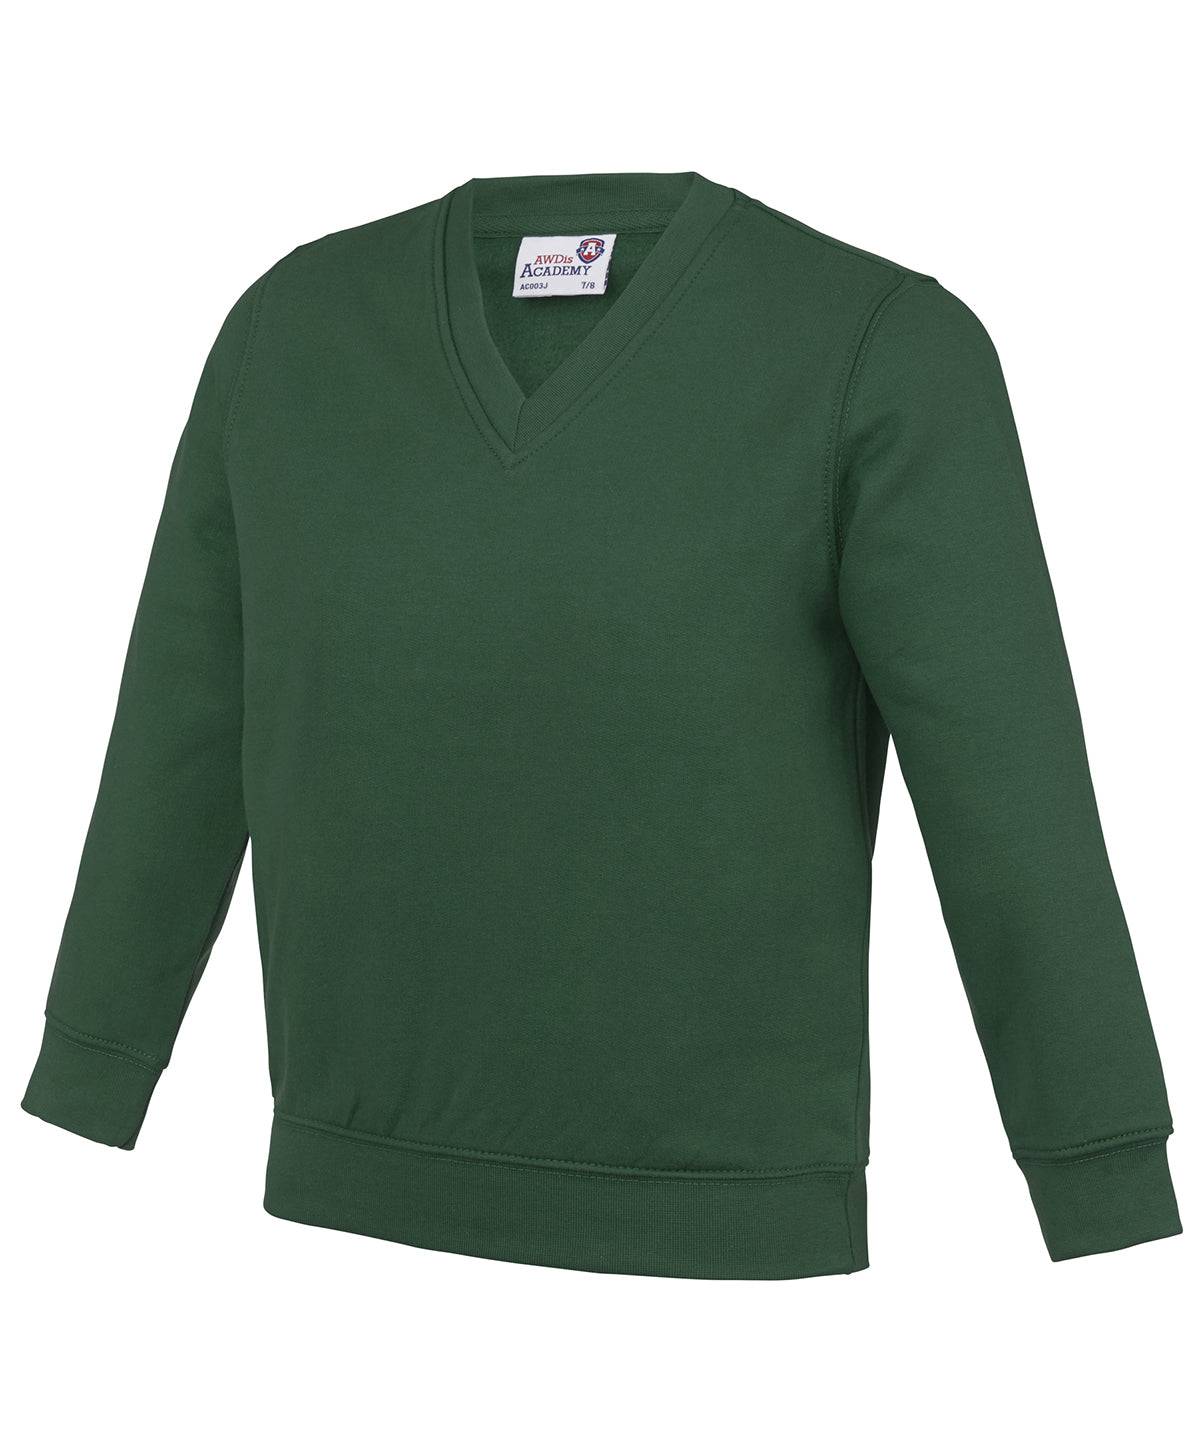 Academy Green - Kids Academy v-neck sweatshirt